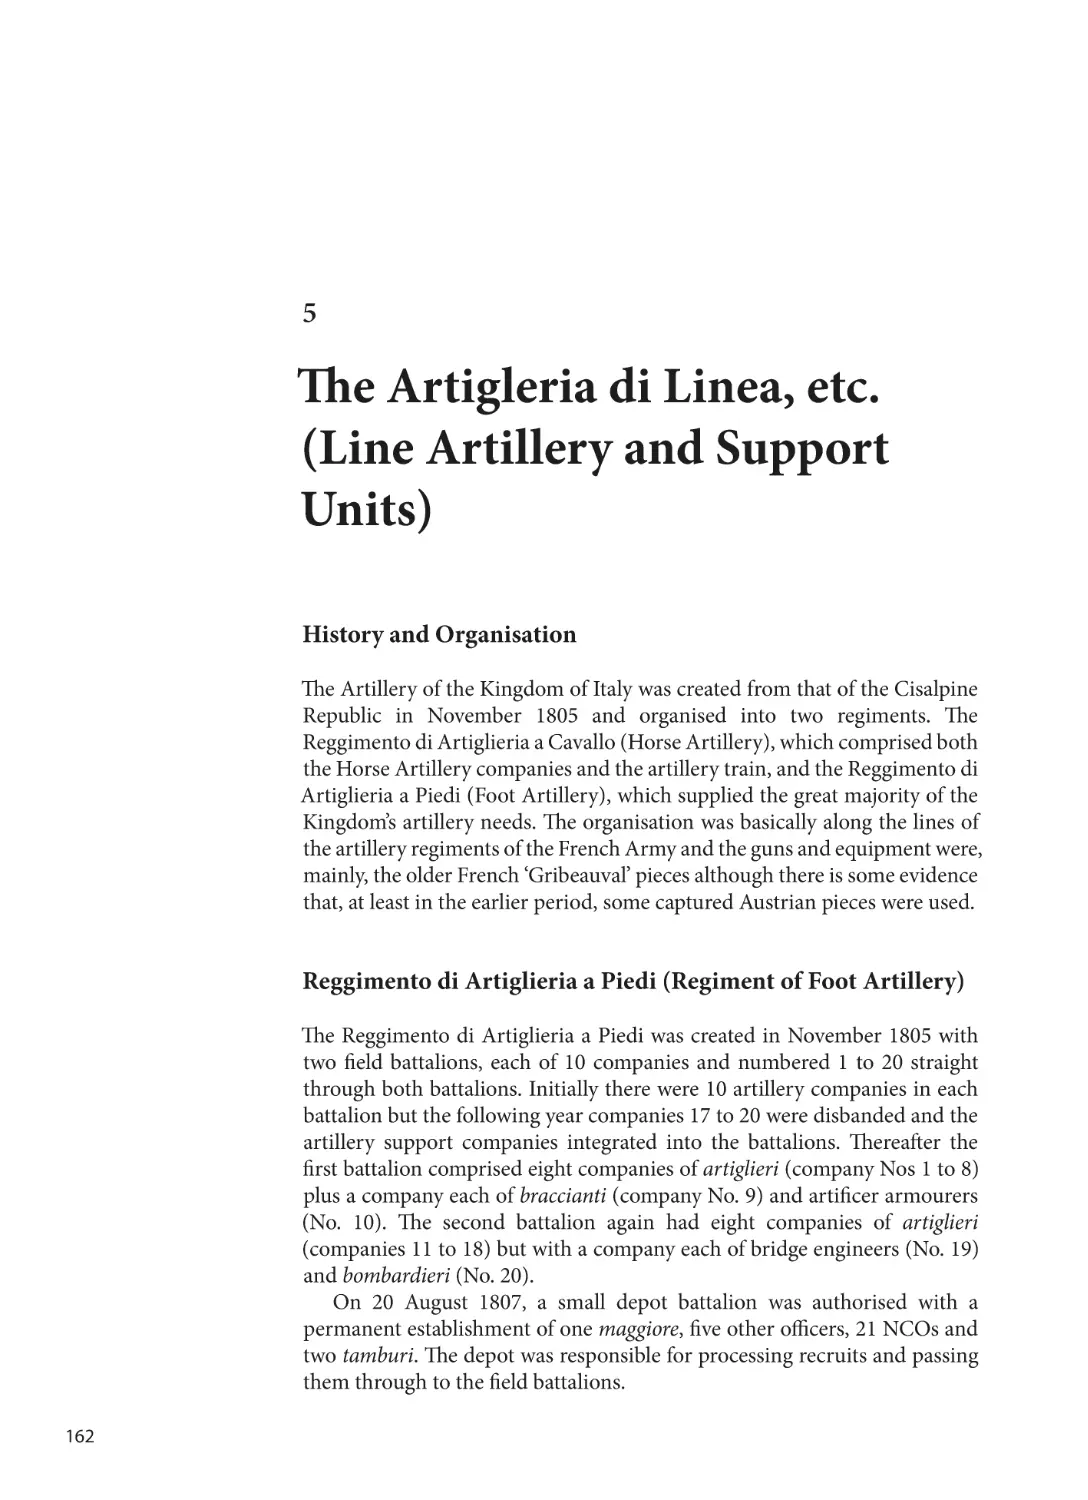 5. Artigleria di Linea, etc. (Line Artillery and Support Units)